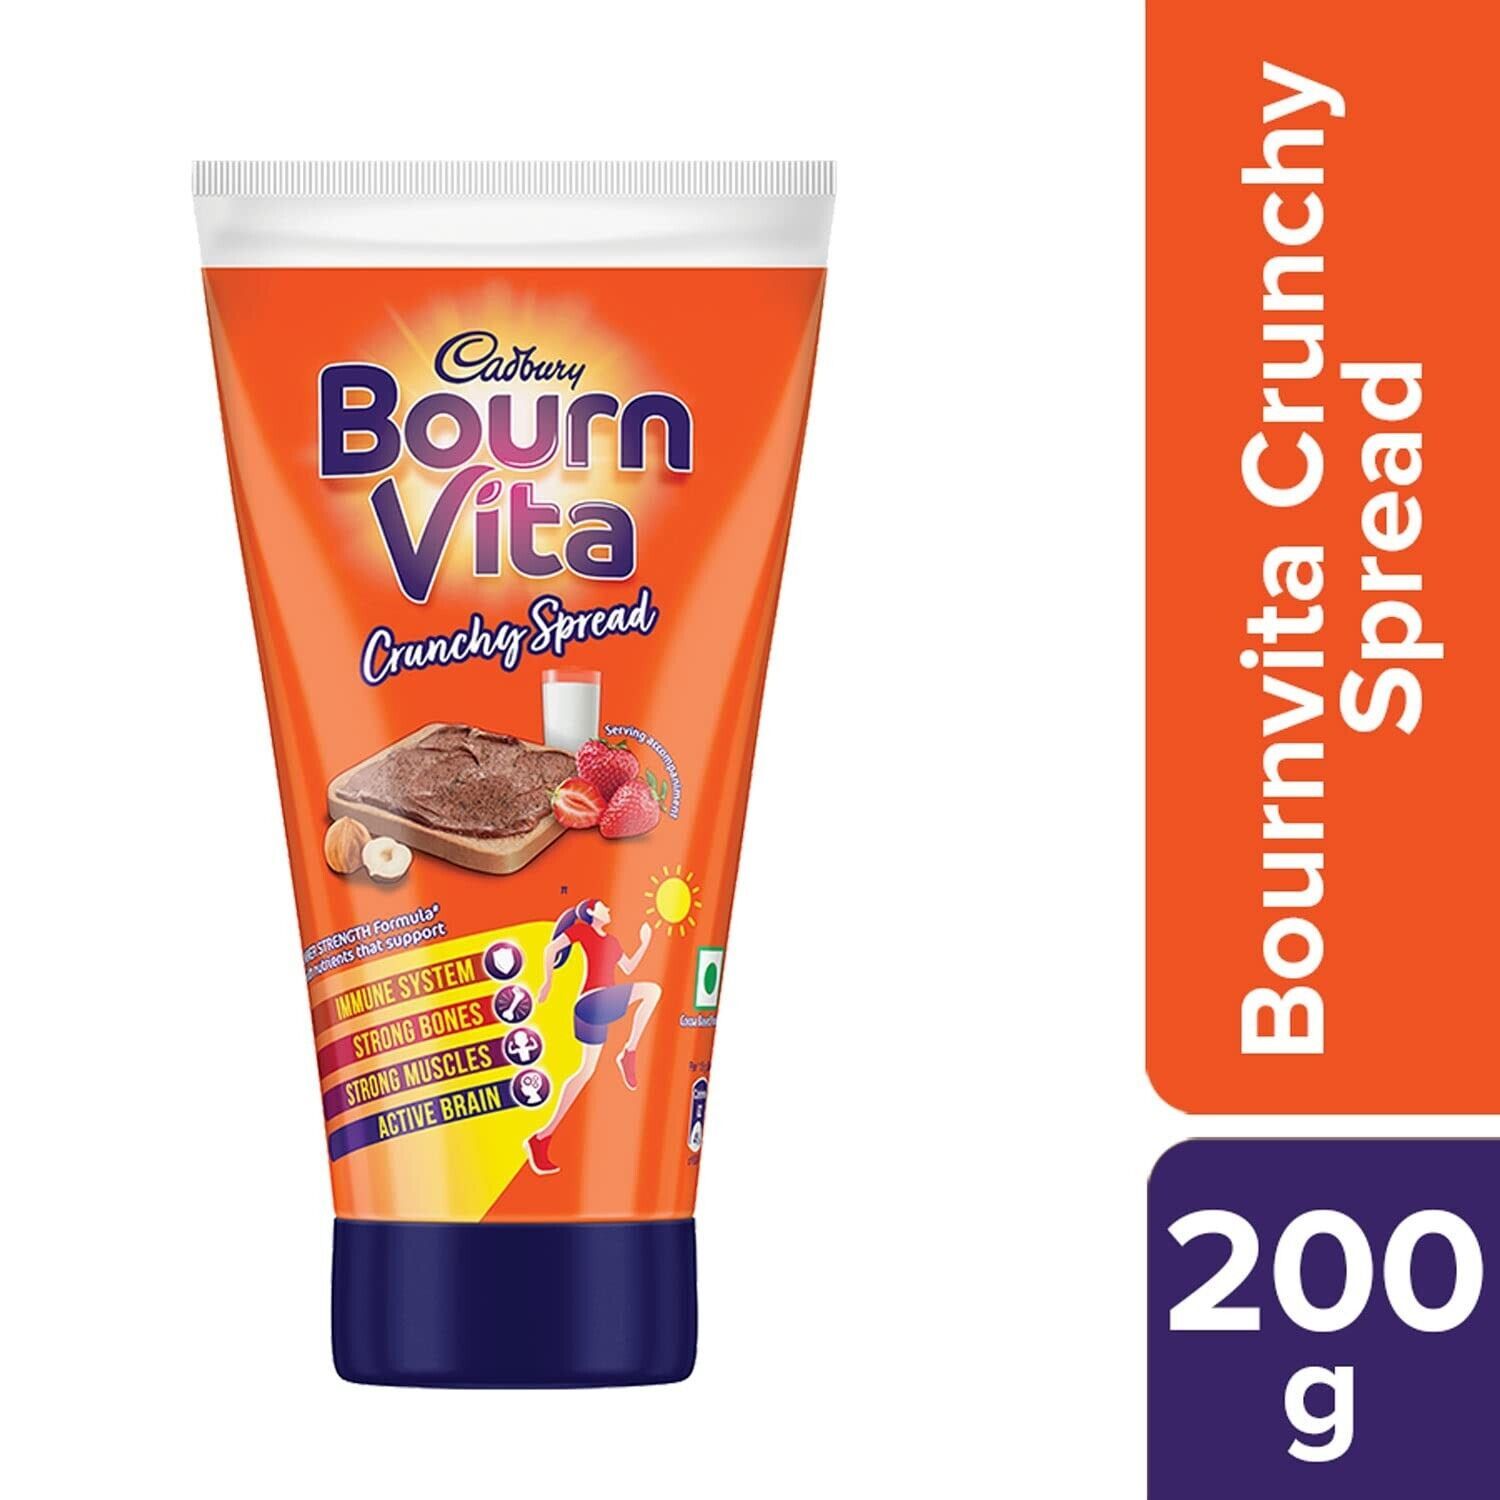 200 grams Cadbury Bournvita Crunchy Spread, 200g FREE SHIP - $26.73